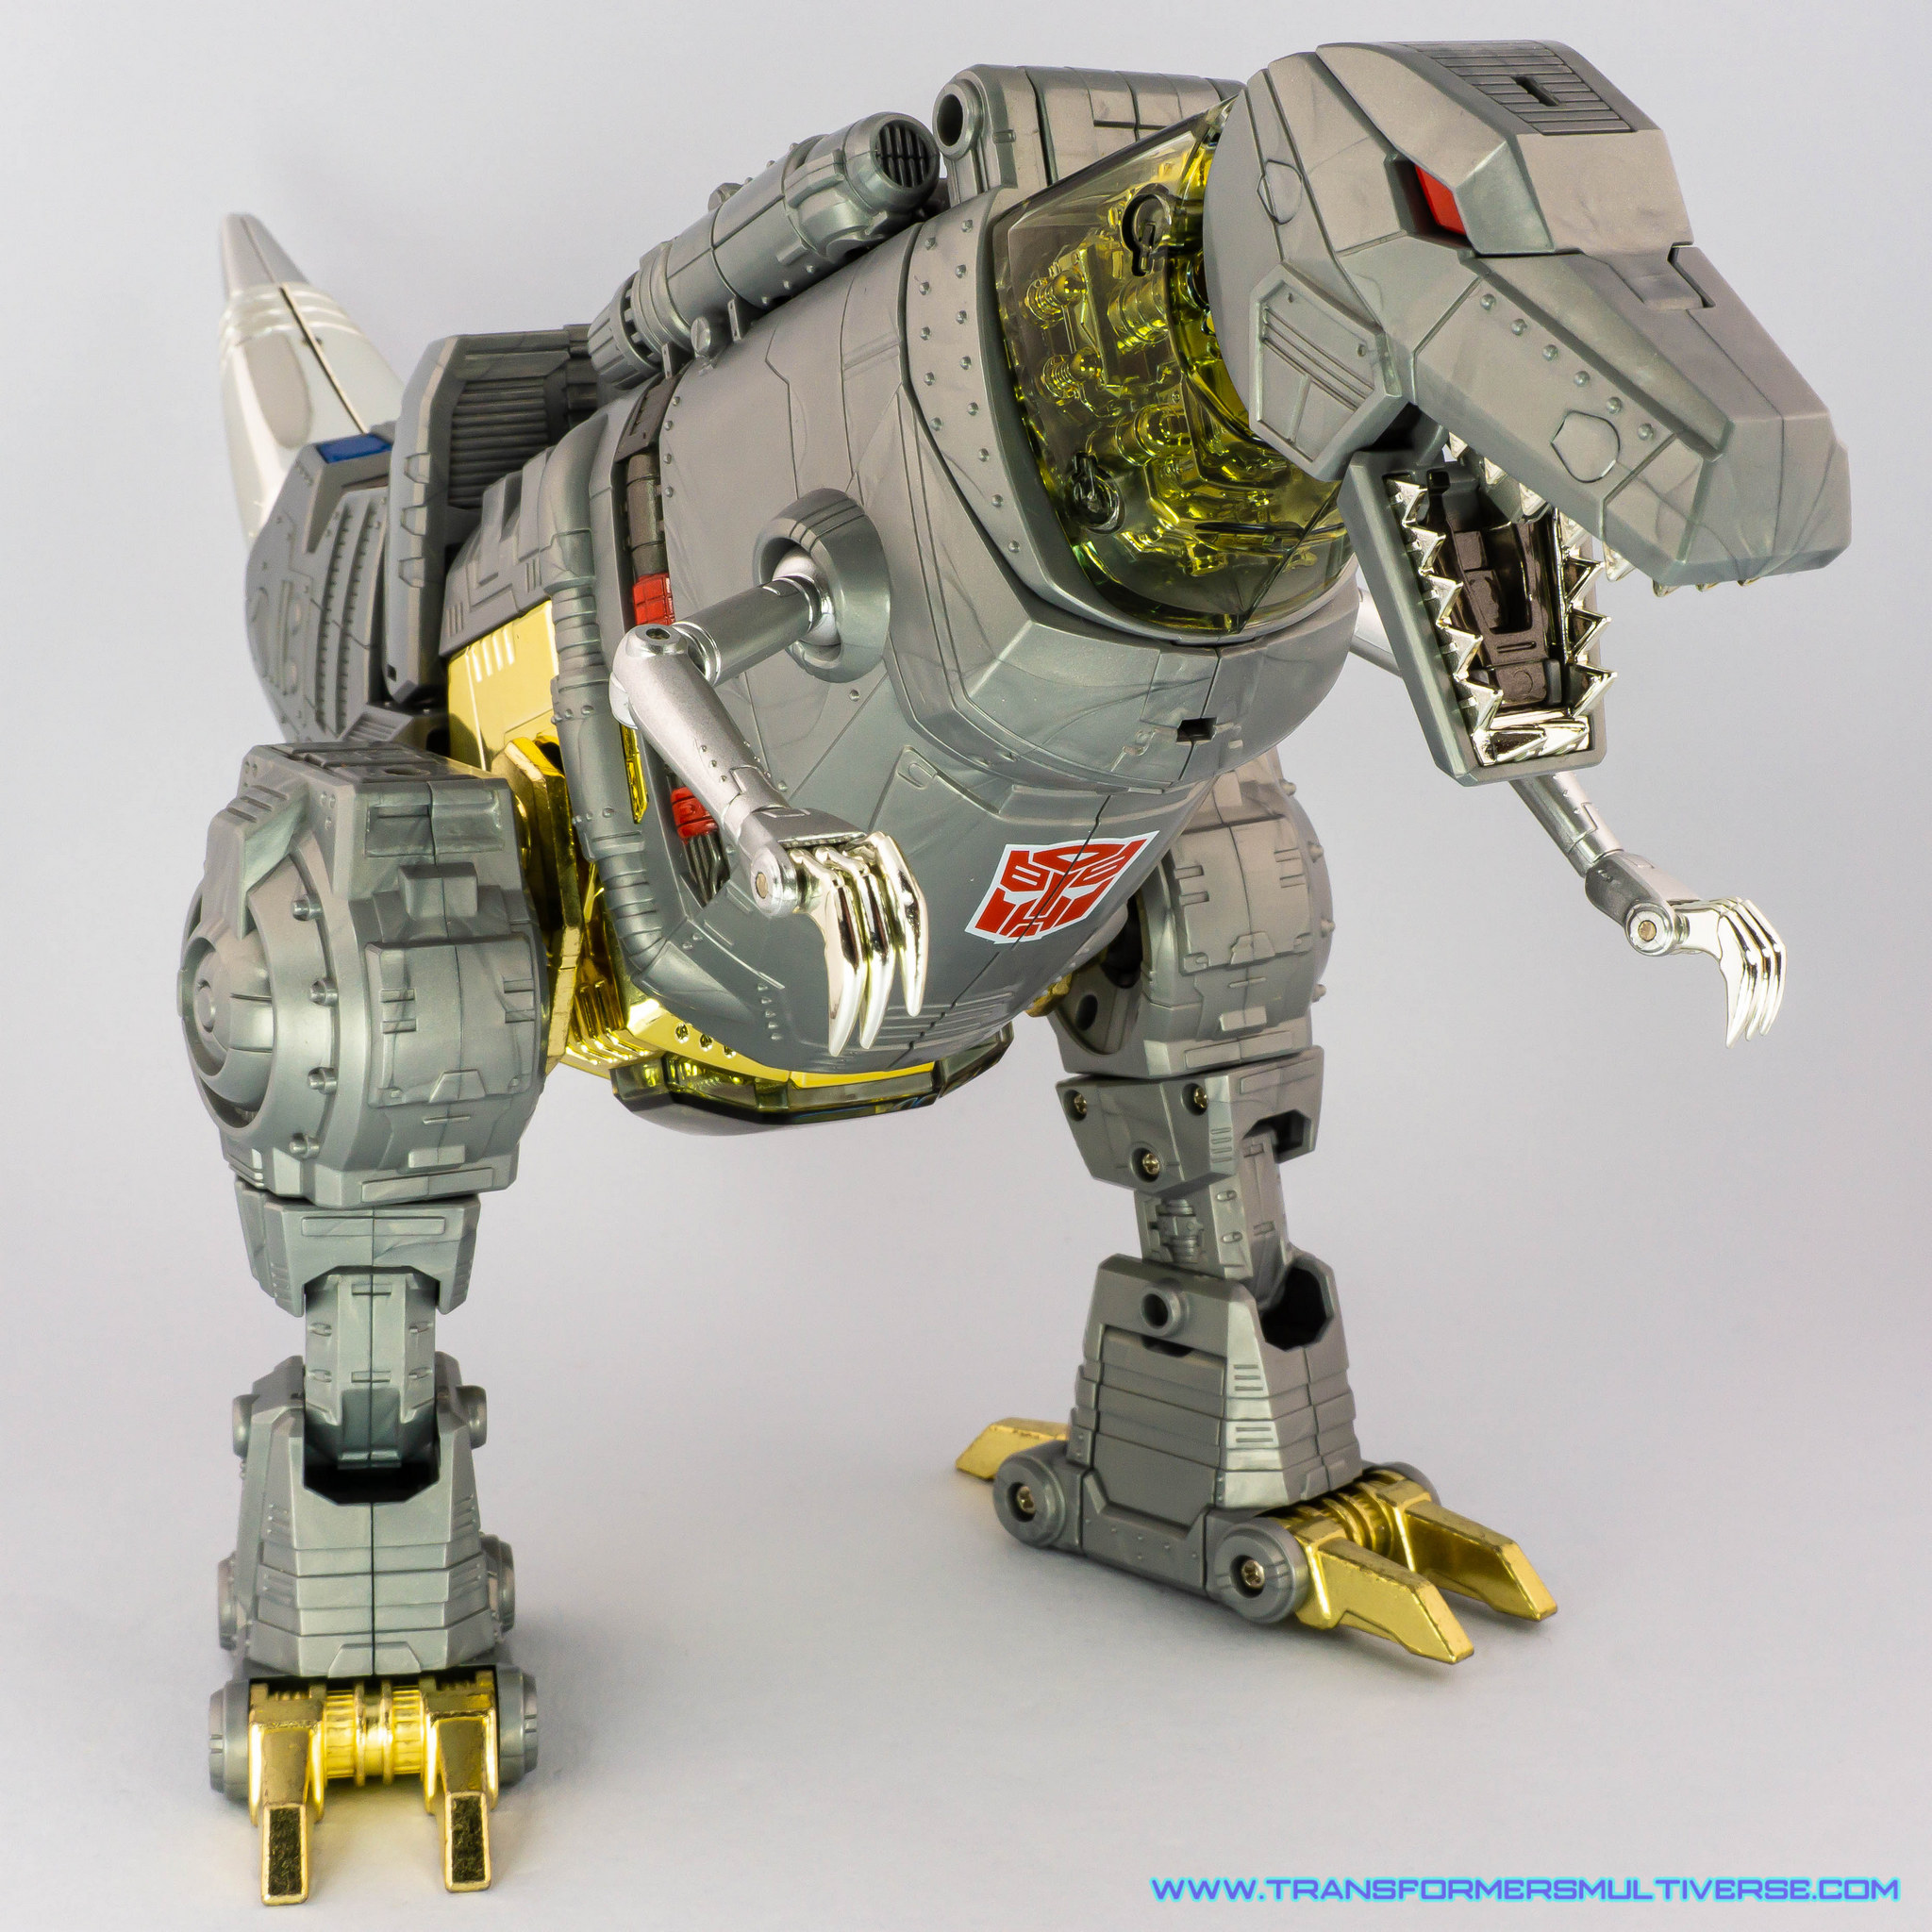 Transformers Masterpiece Grimlock Tyrannosaurus Rex mode with red eyes 1